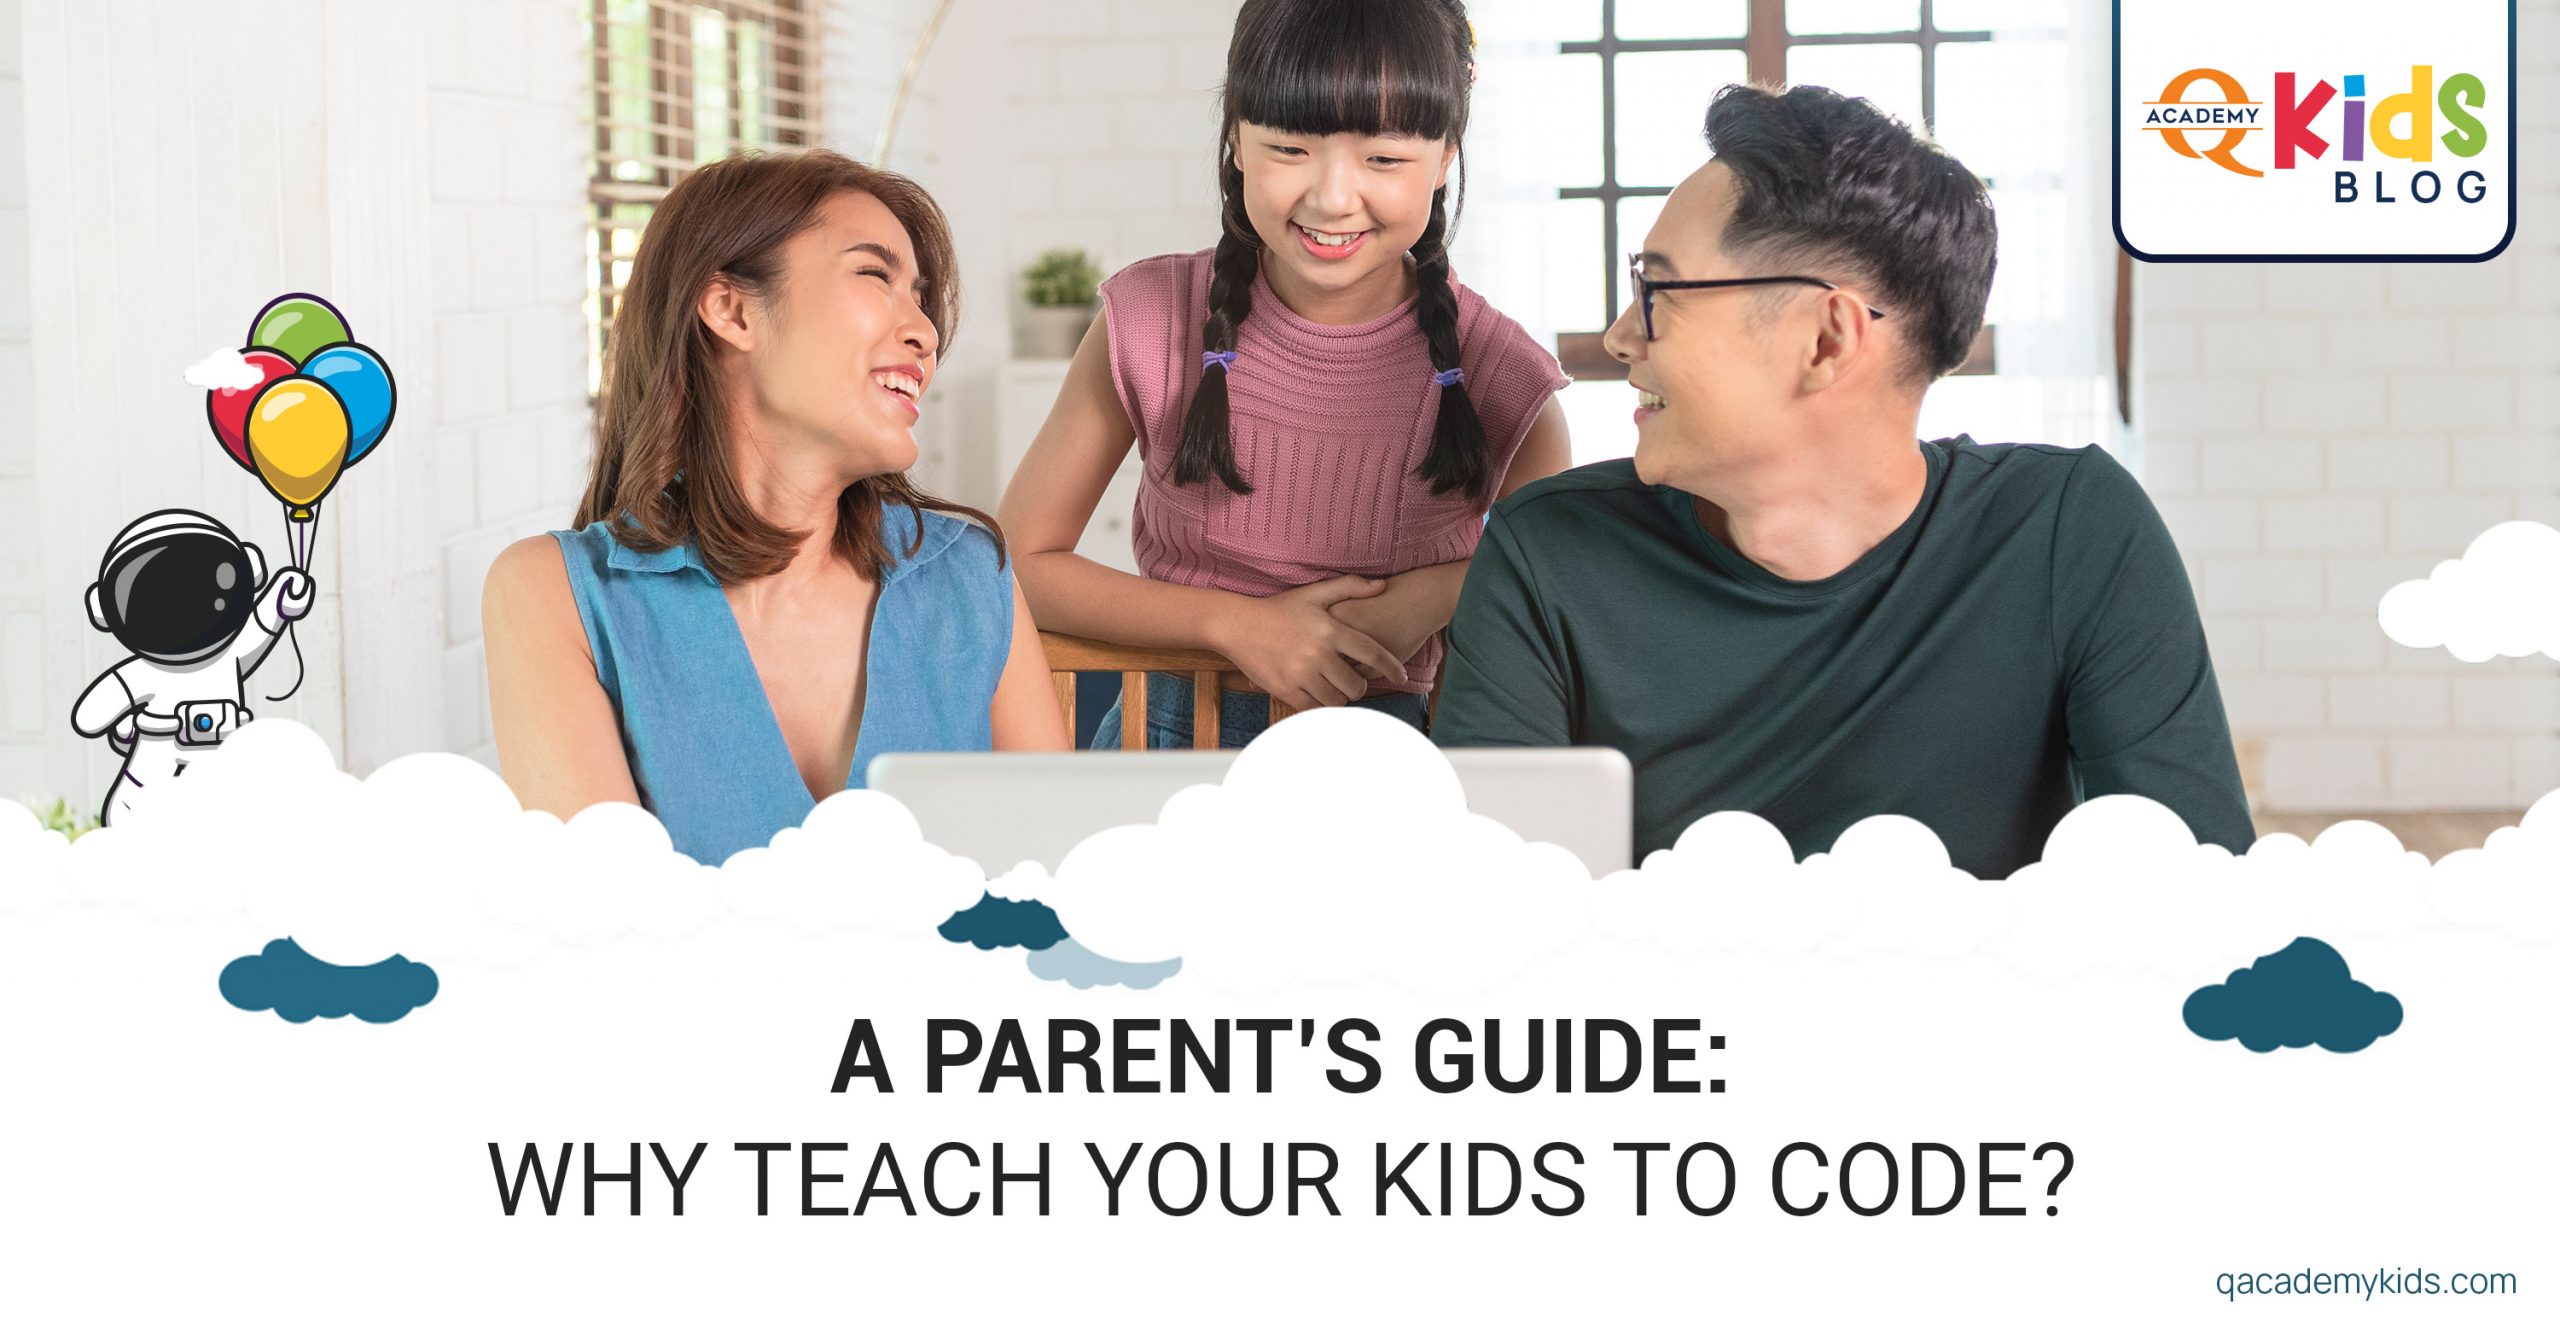 Teach Kids to Code - QA Kids